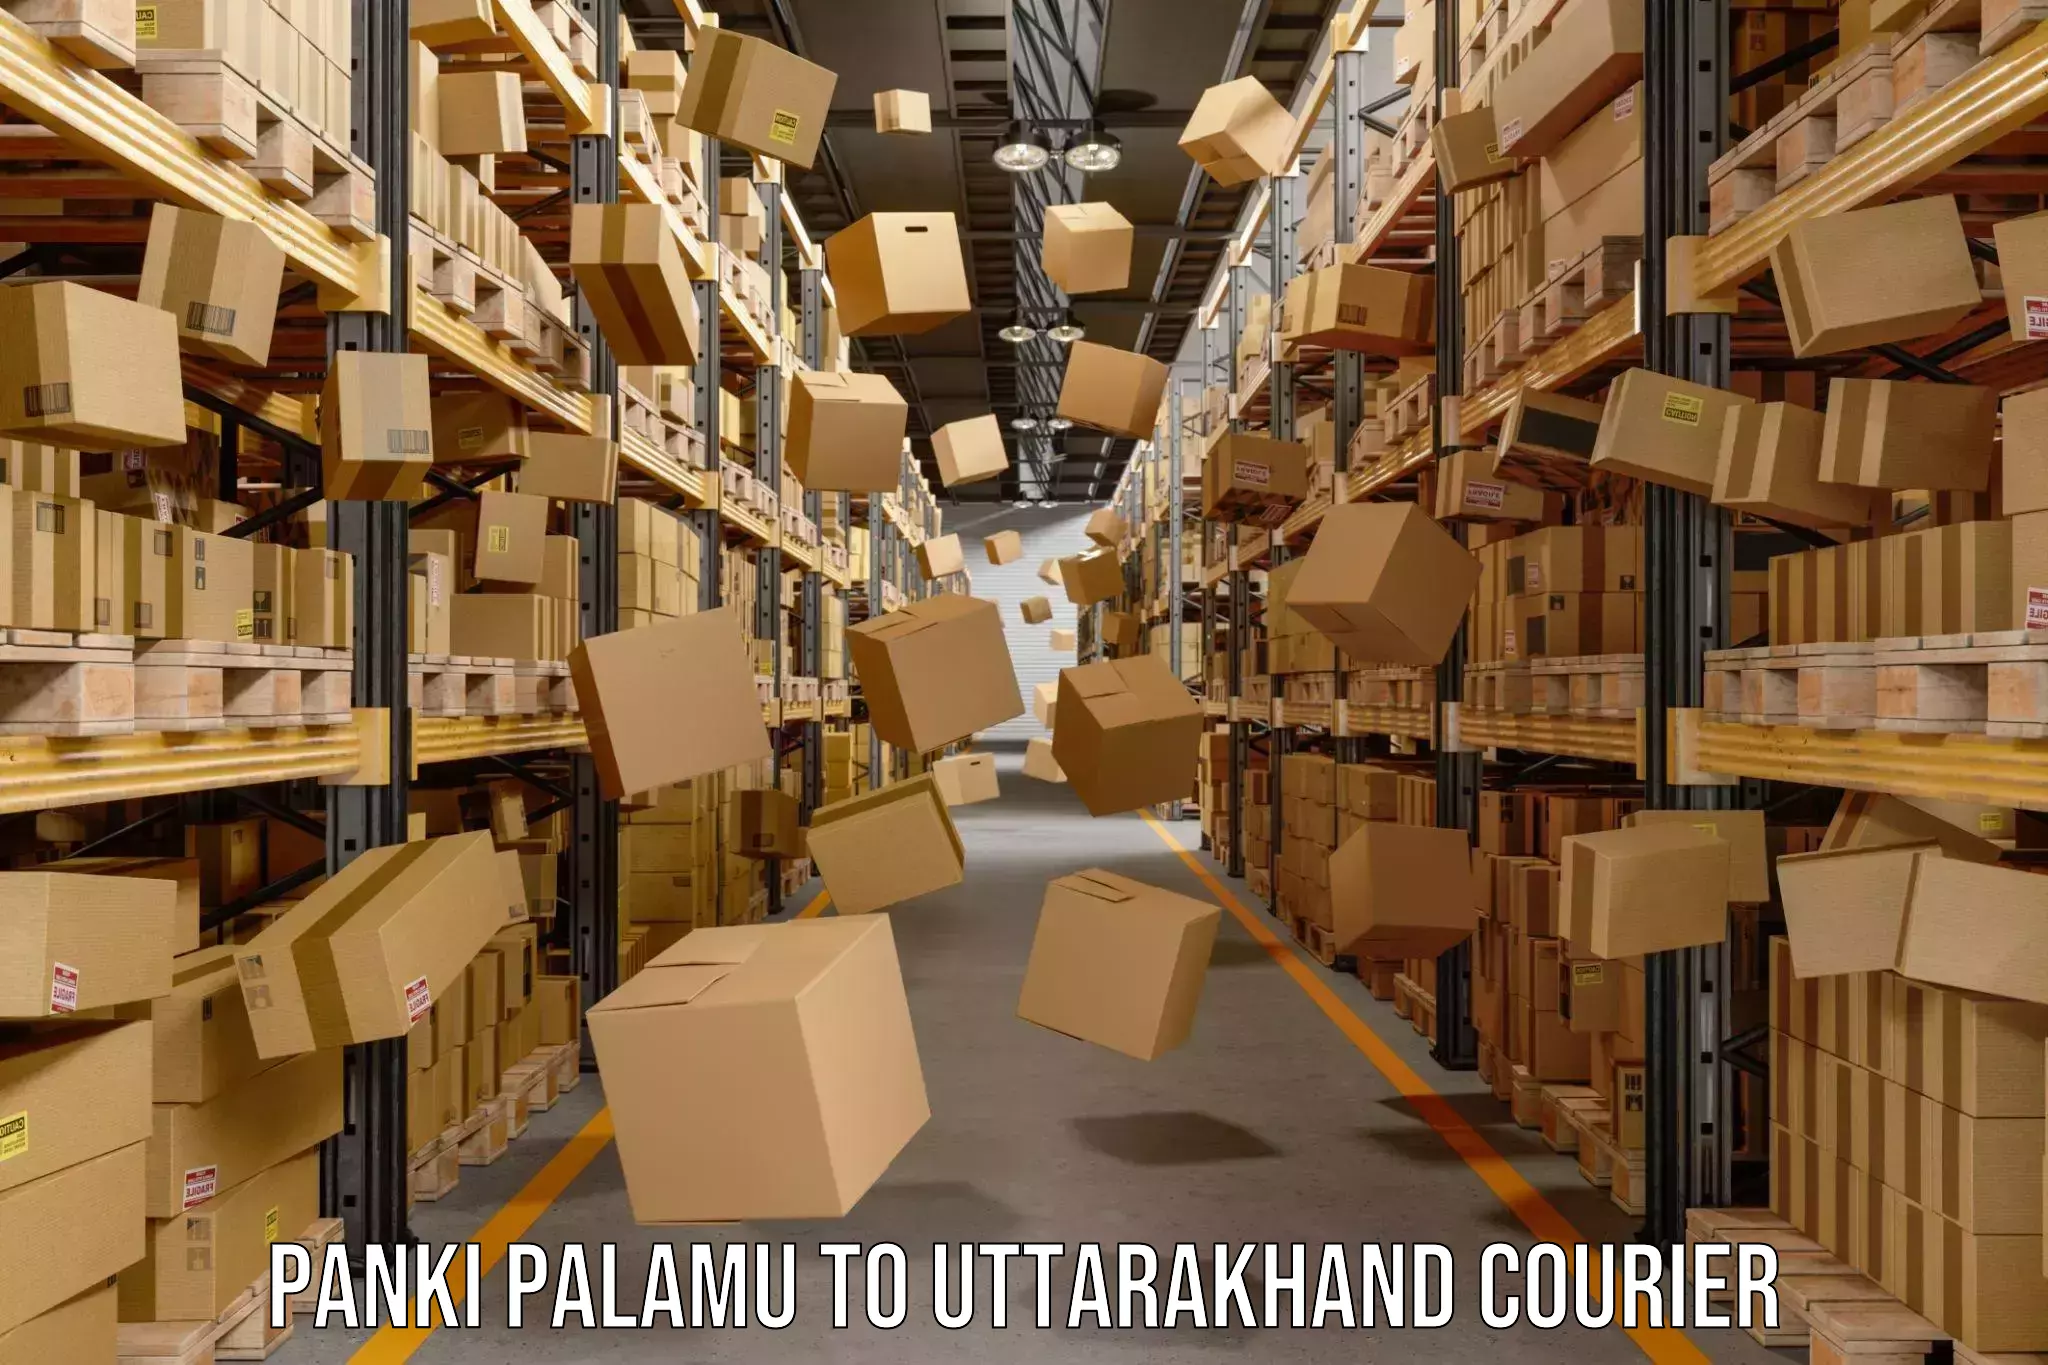 Courier service comparison Panki Palamu to Uttarakhand